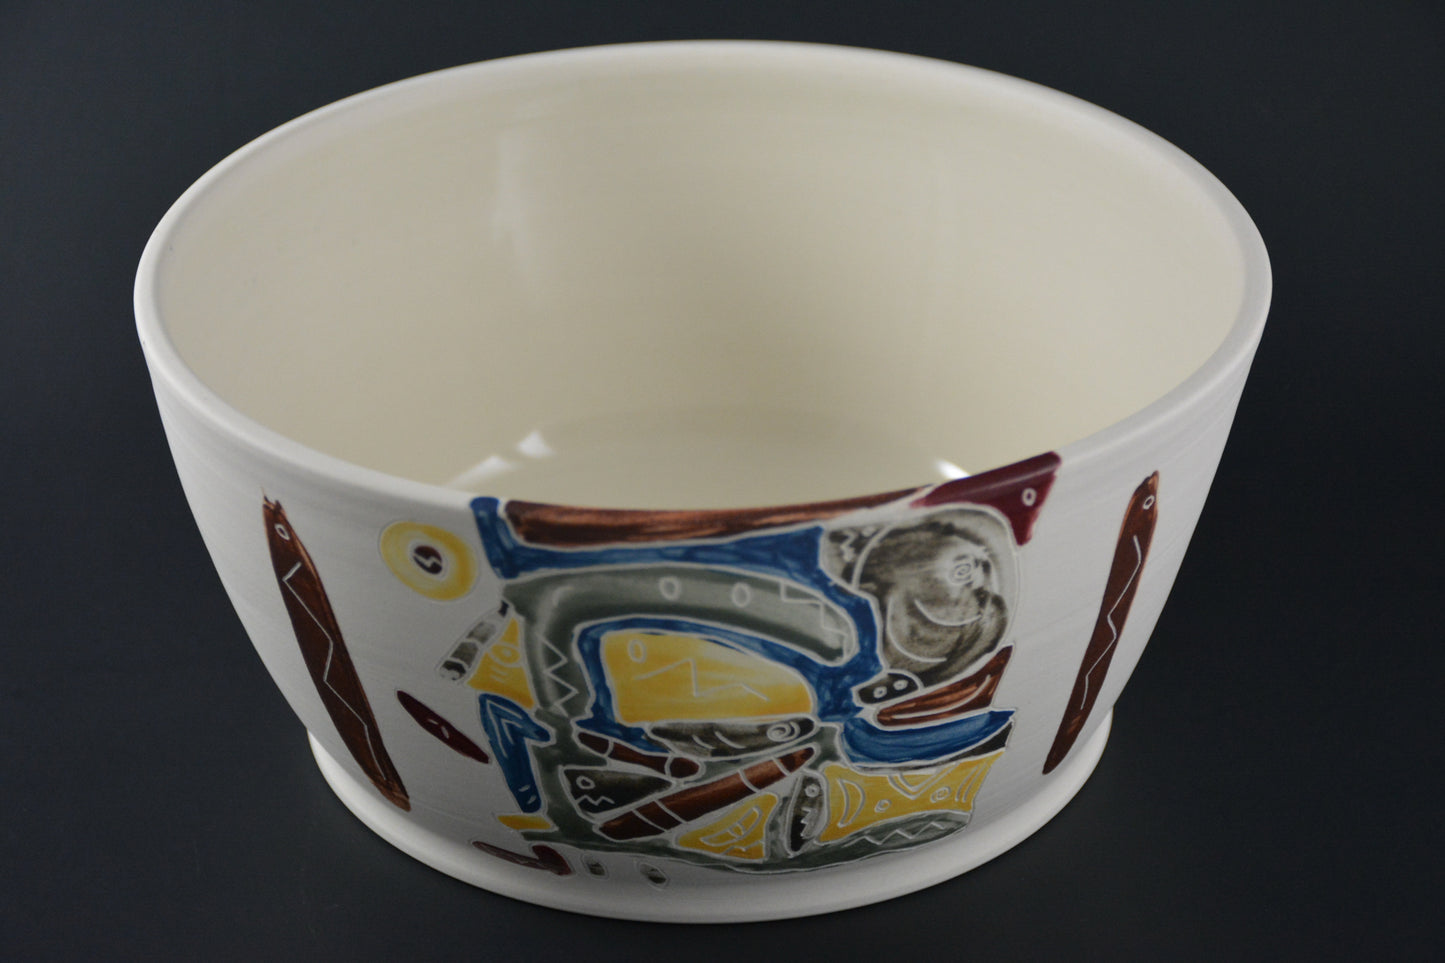 BL-27 Ceramic Bowl - Porcelain bowl